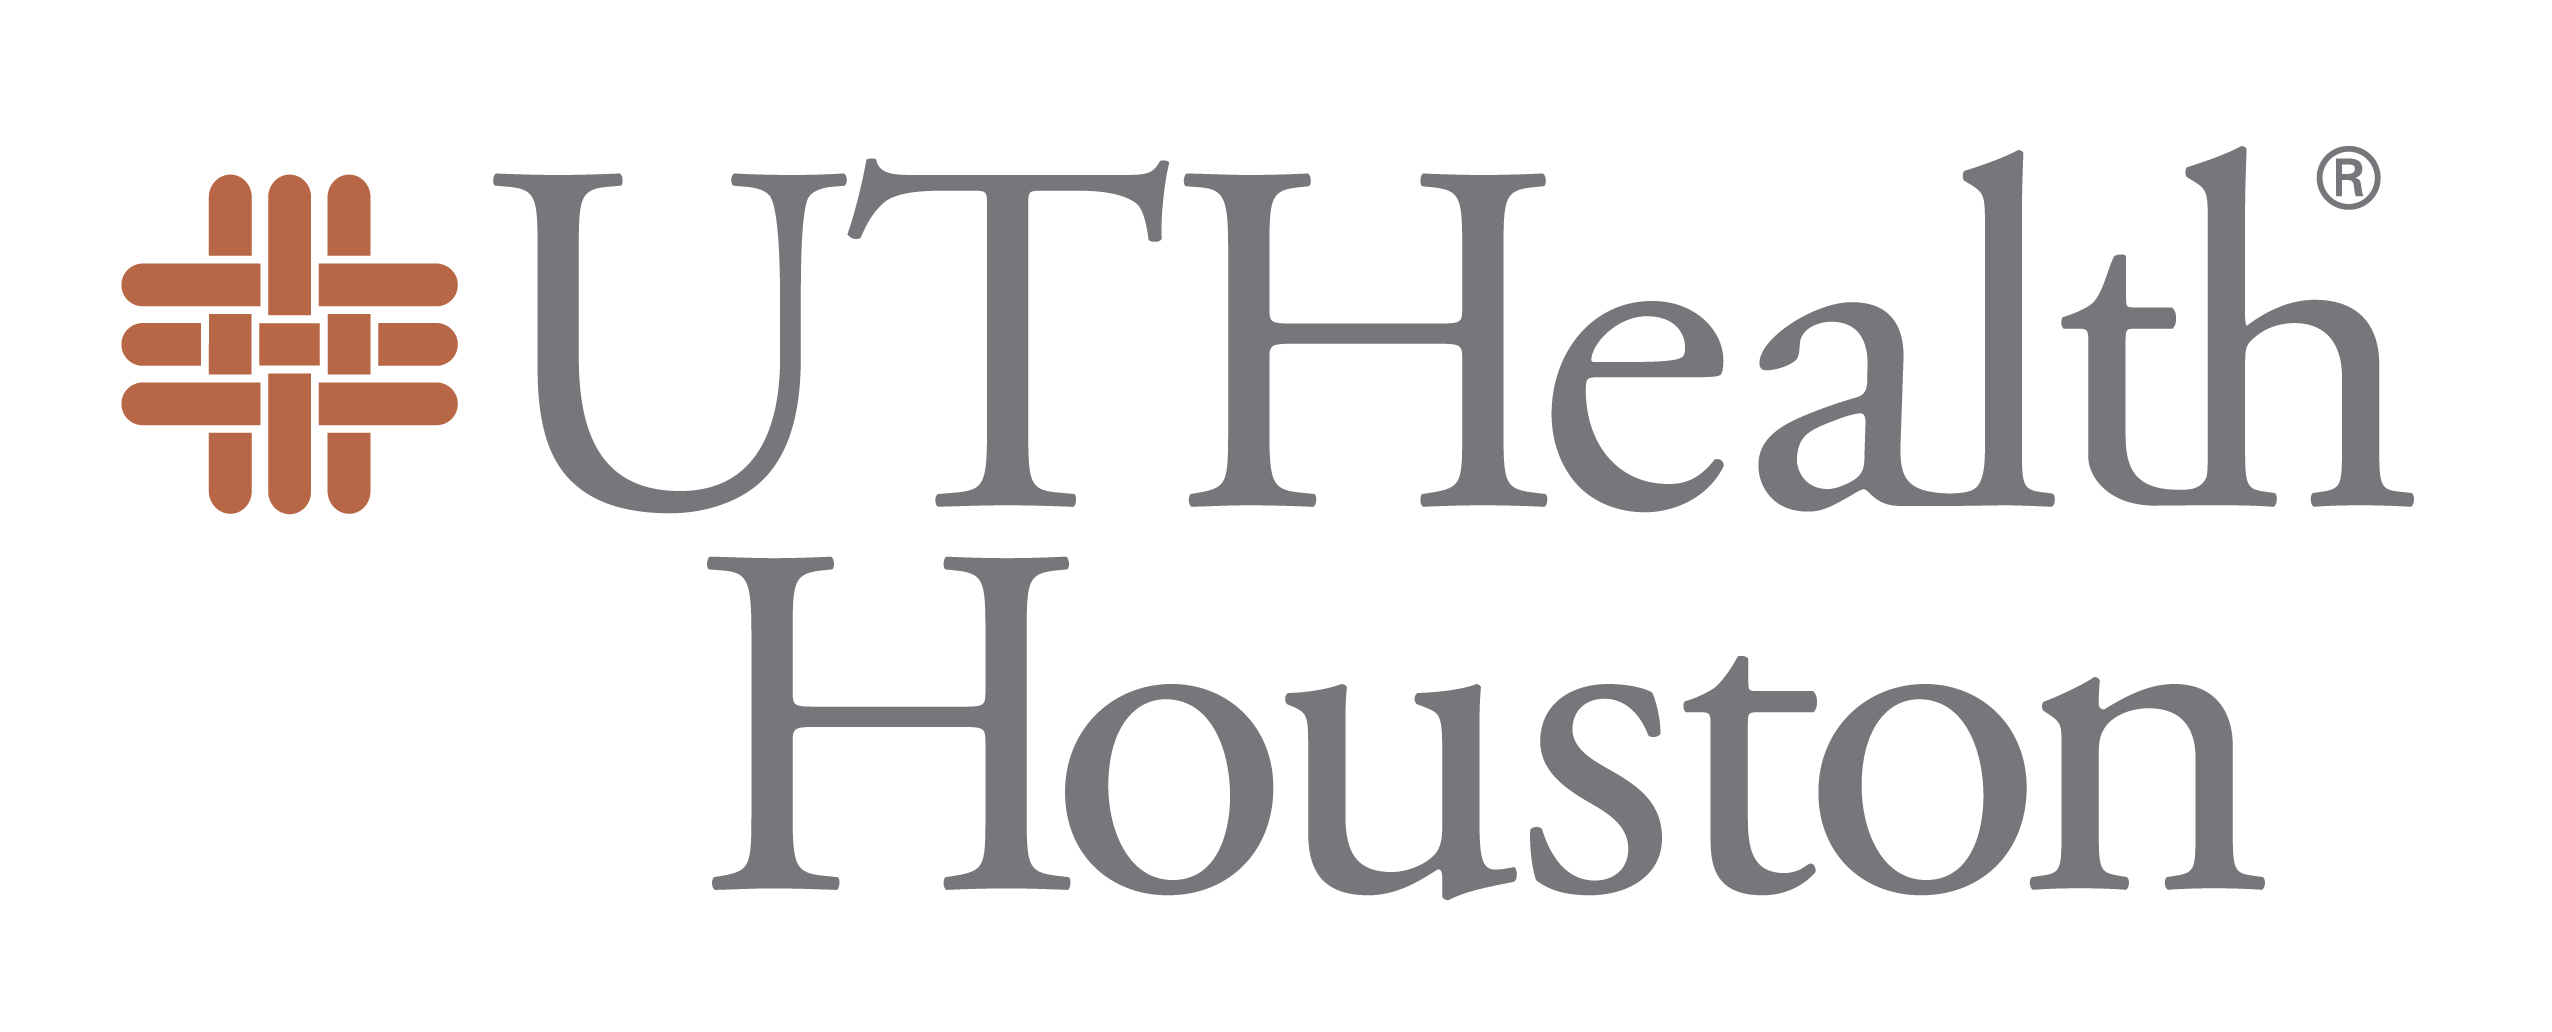 University of Texas, Health Science Center at Houston